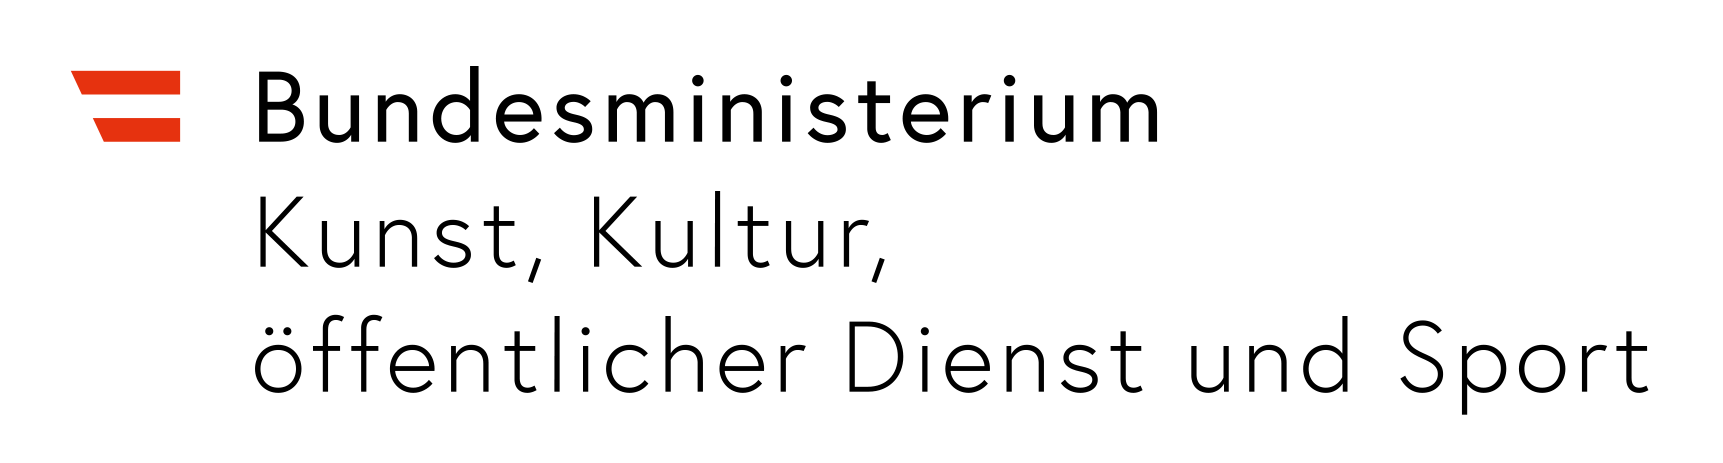 BMOEDS Logo 002